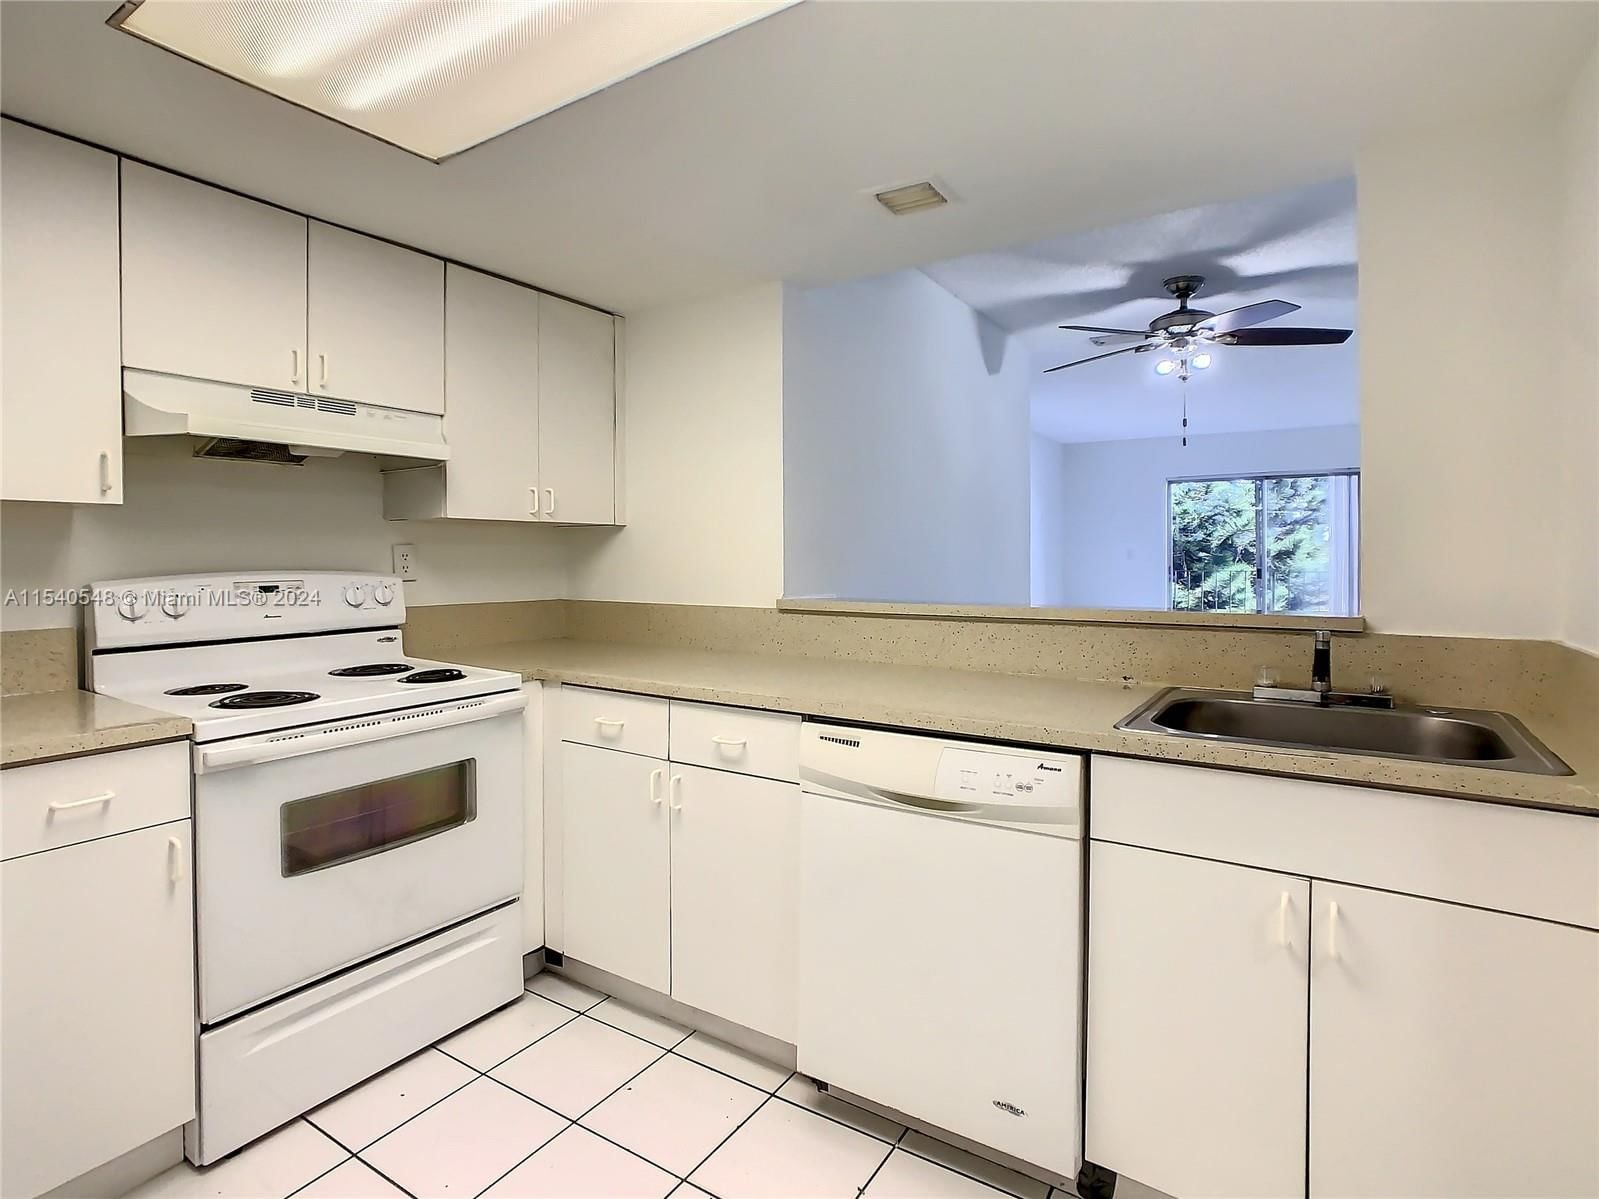 Real estate property located at 10500 8th St #402, Miami-Dade County, EL CAMINO REAL NORTH COND, Miami, FL